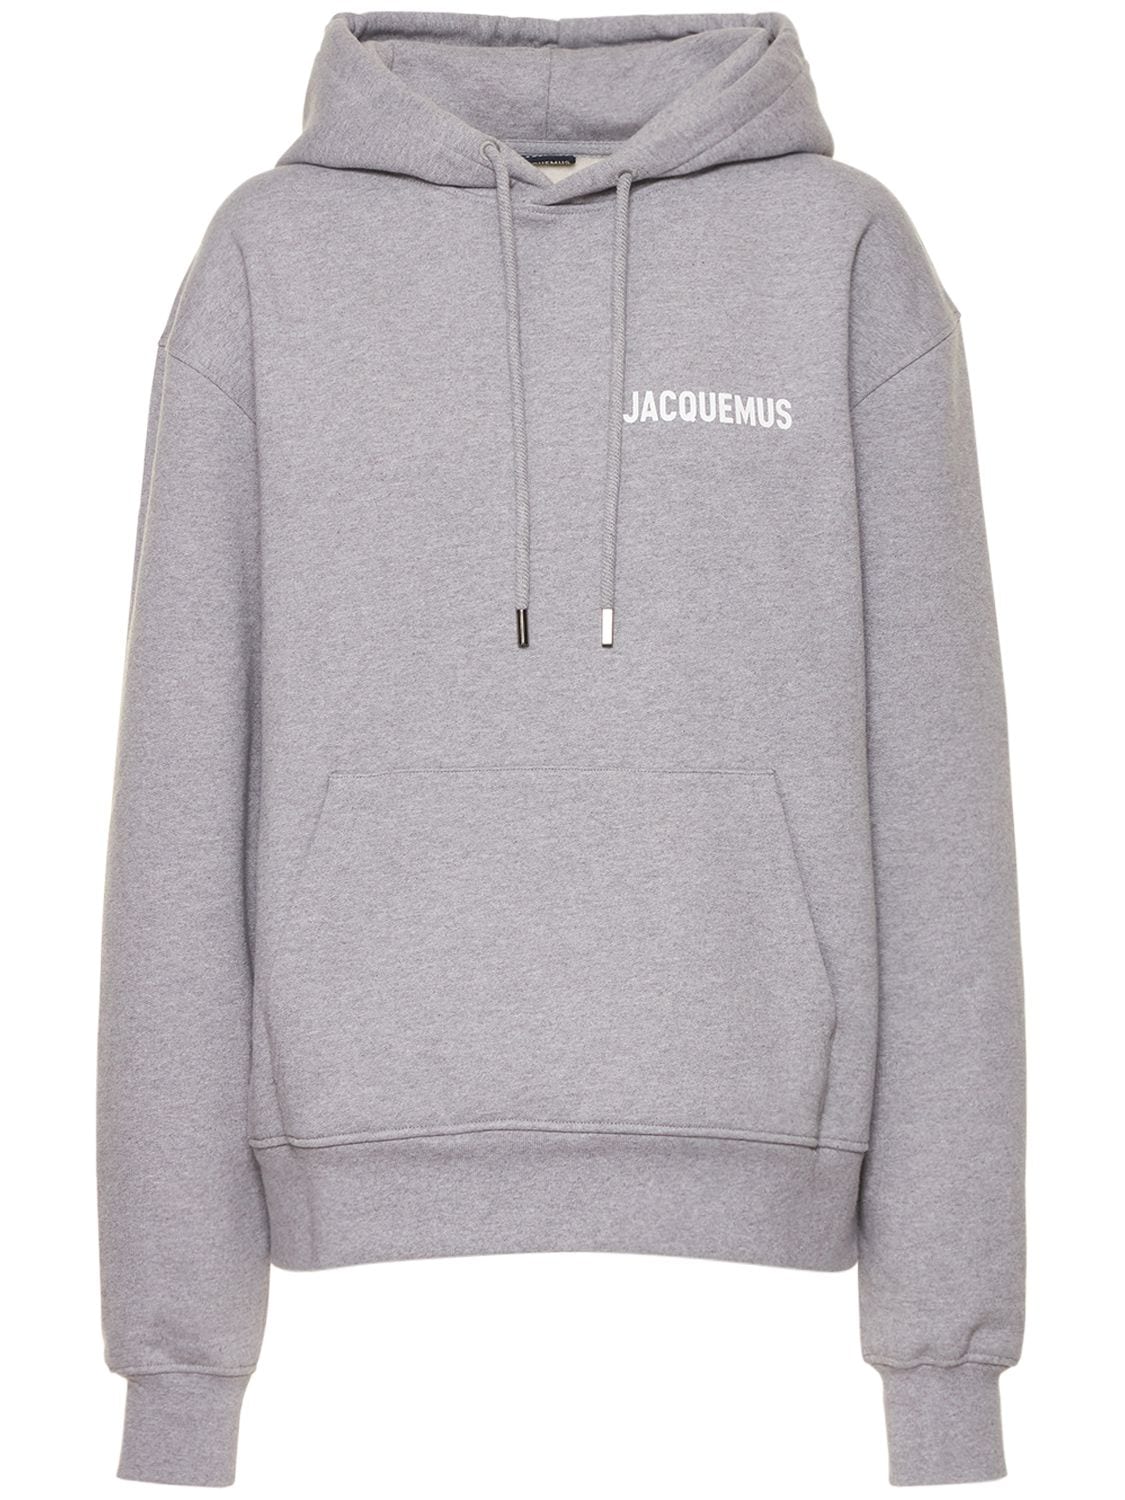 JACQUEMUS Le Sweatshirt Cotton Jersey Hoodie